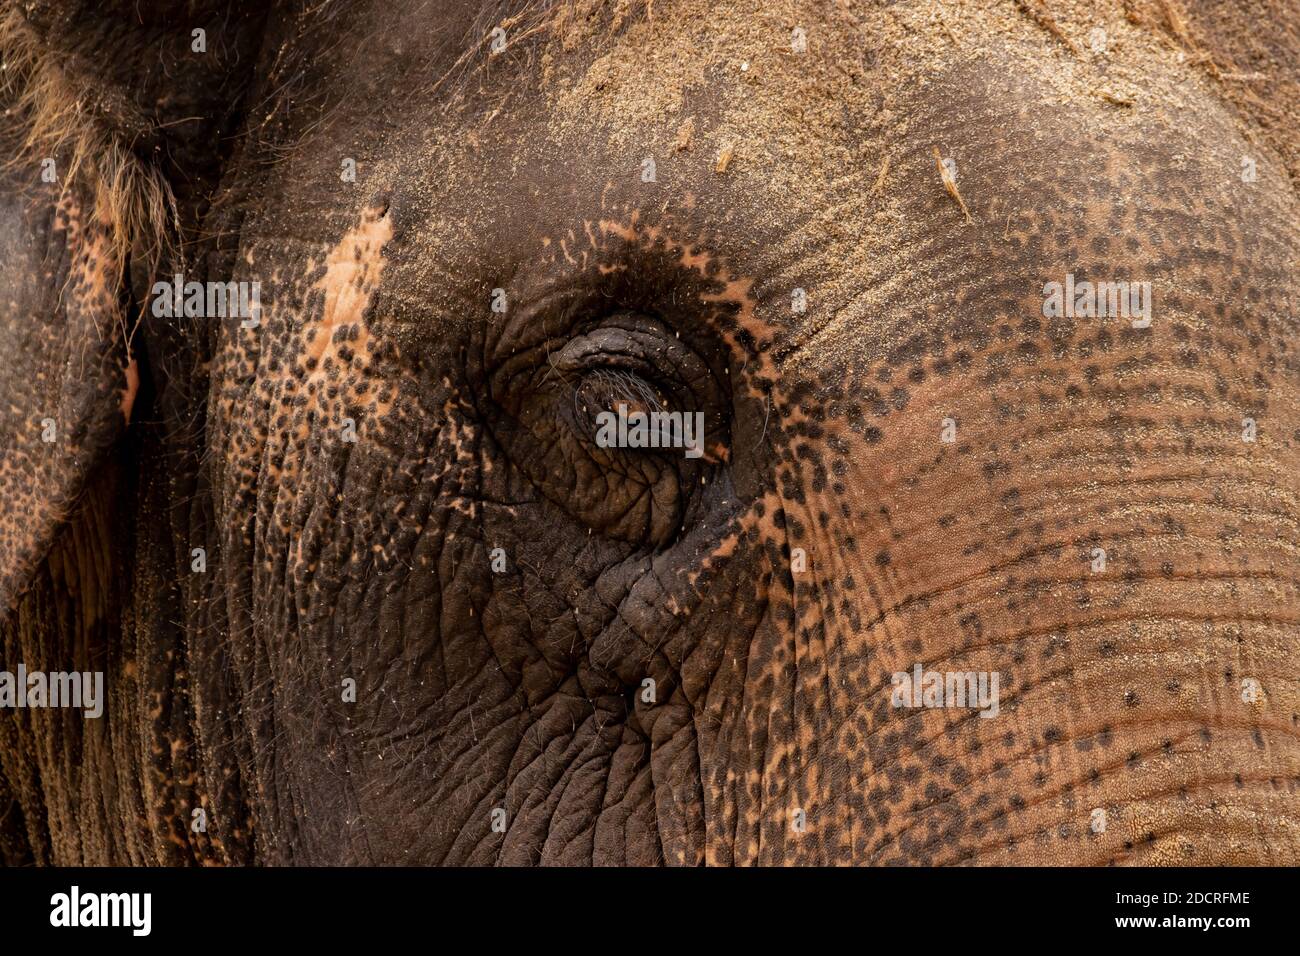 Asiatic elephant in captivity Stock Photo